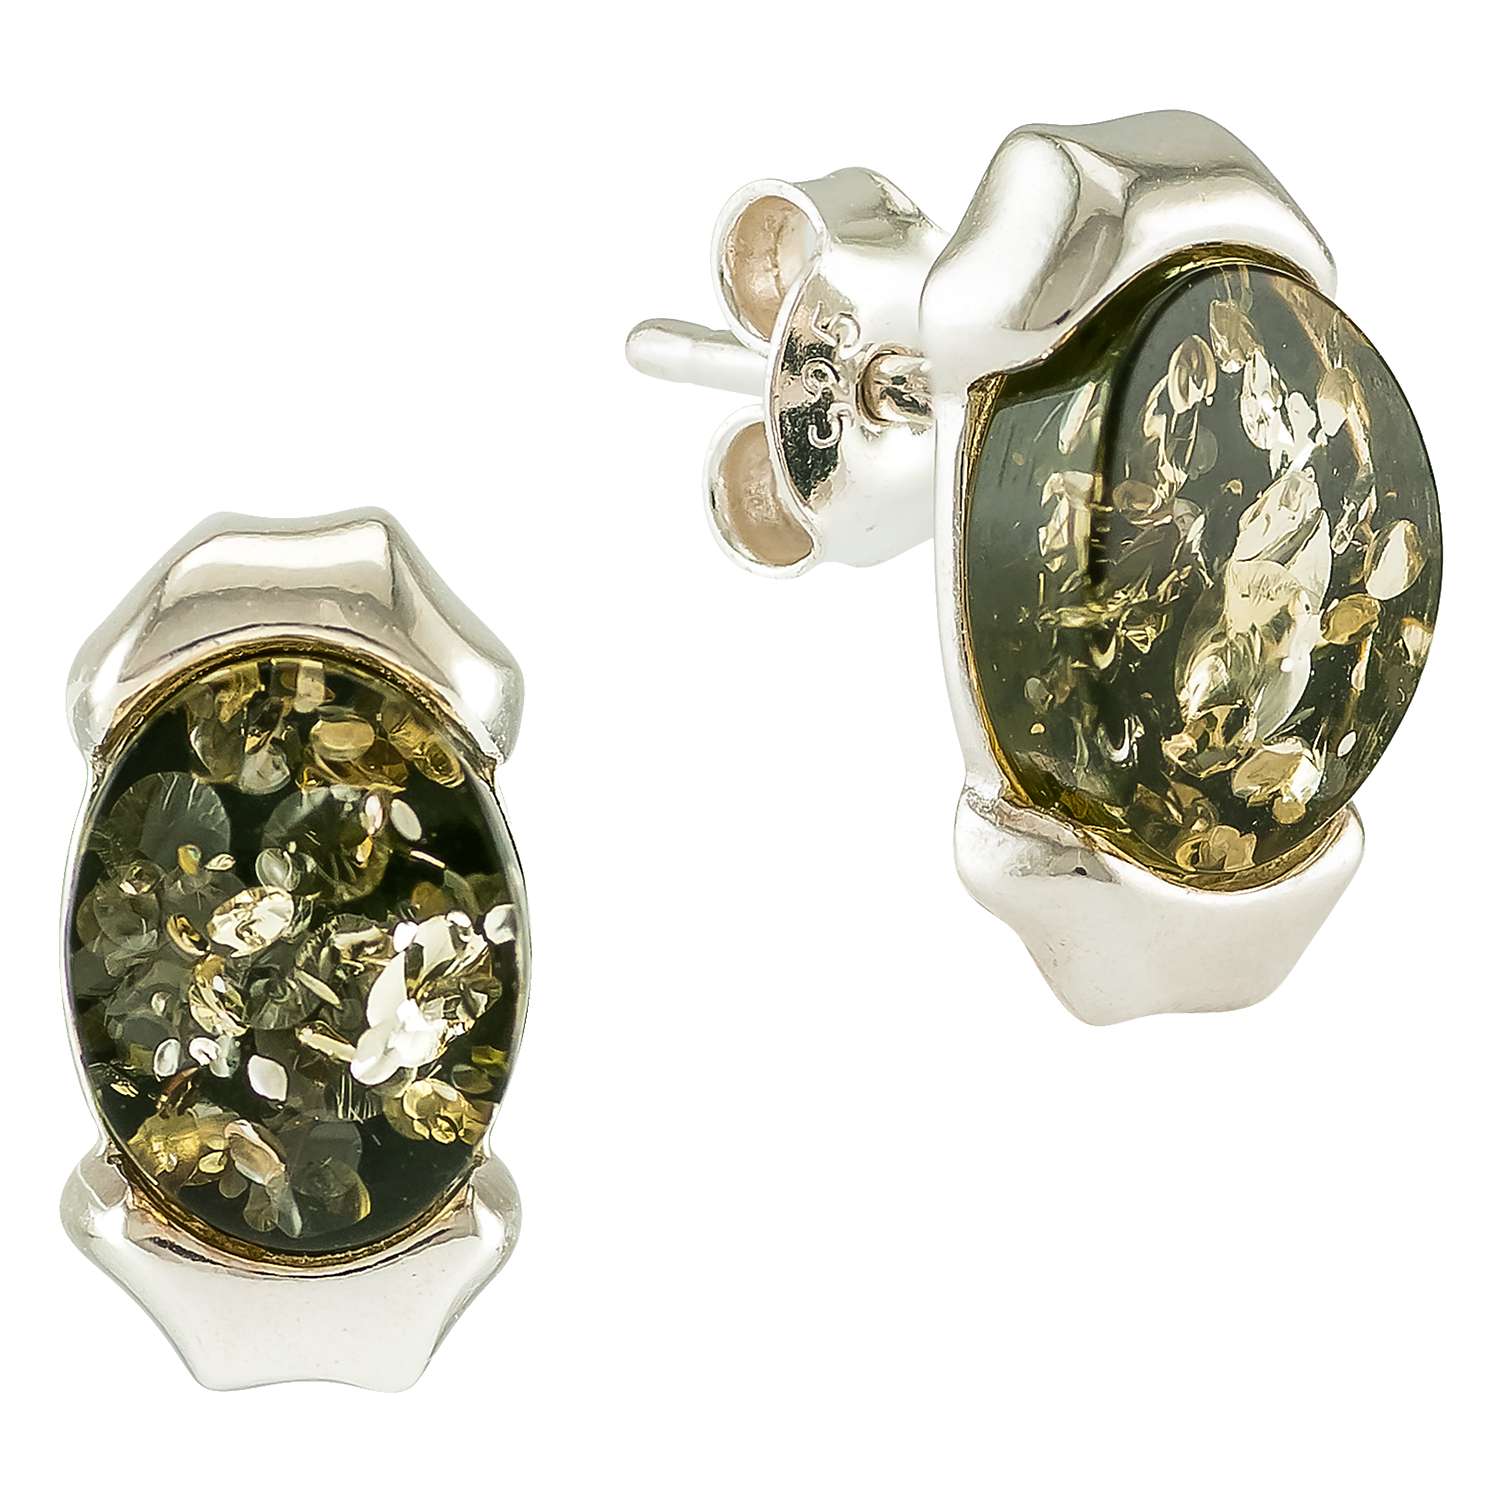 Buy Be-Jewelled Sterling Silver Oblong Cognac Earrings Online at johnlewis.com